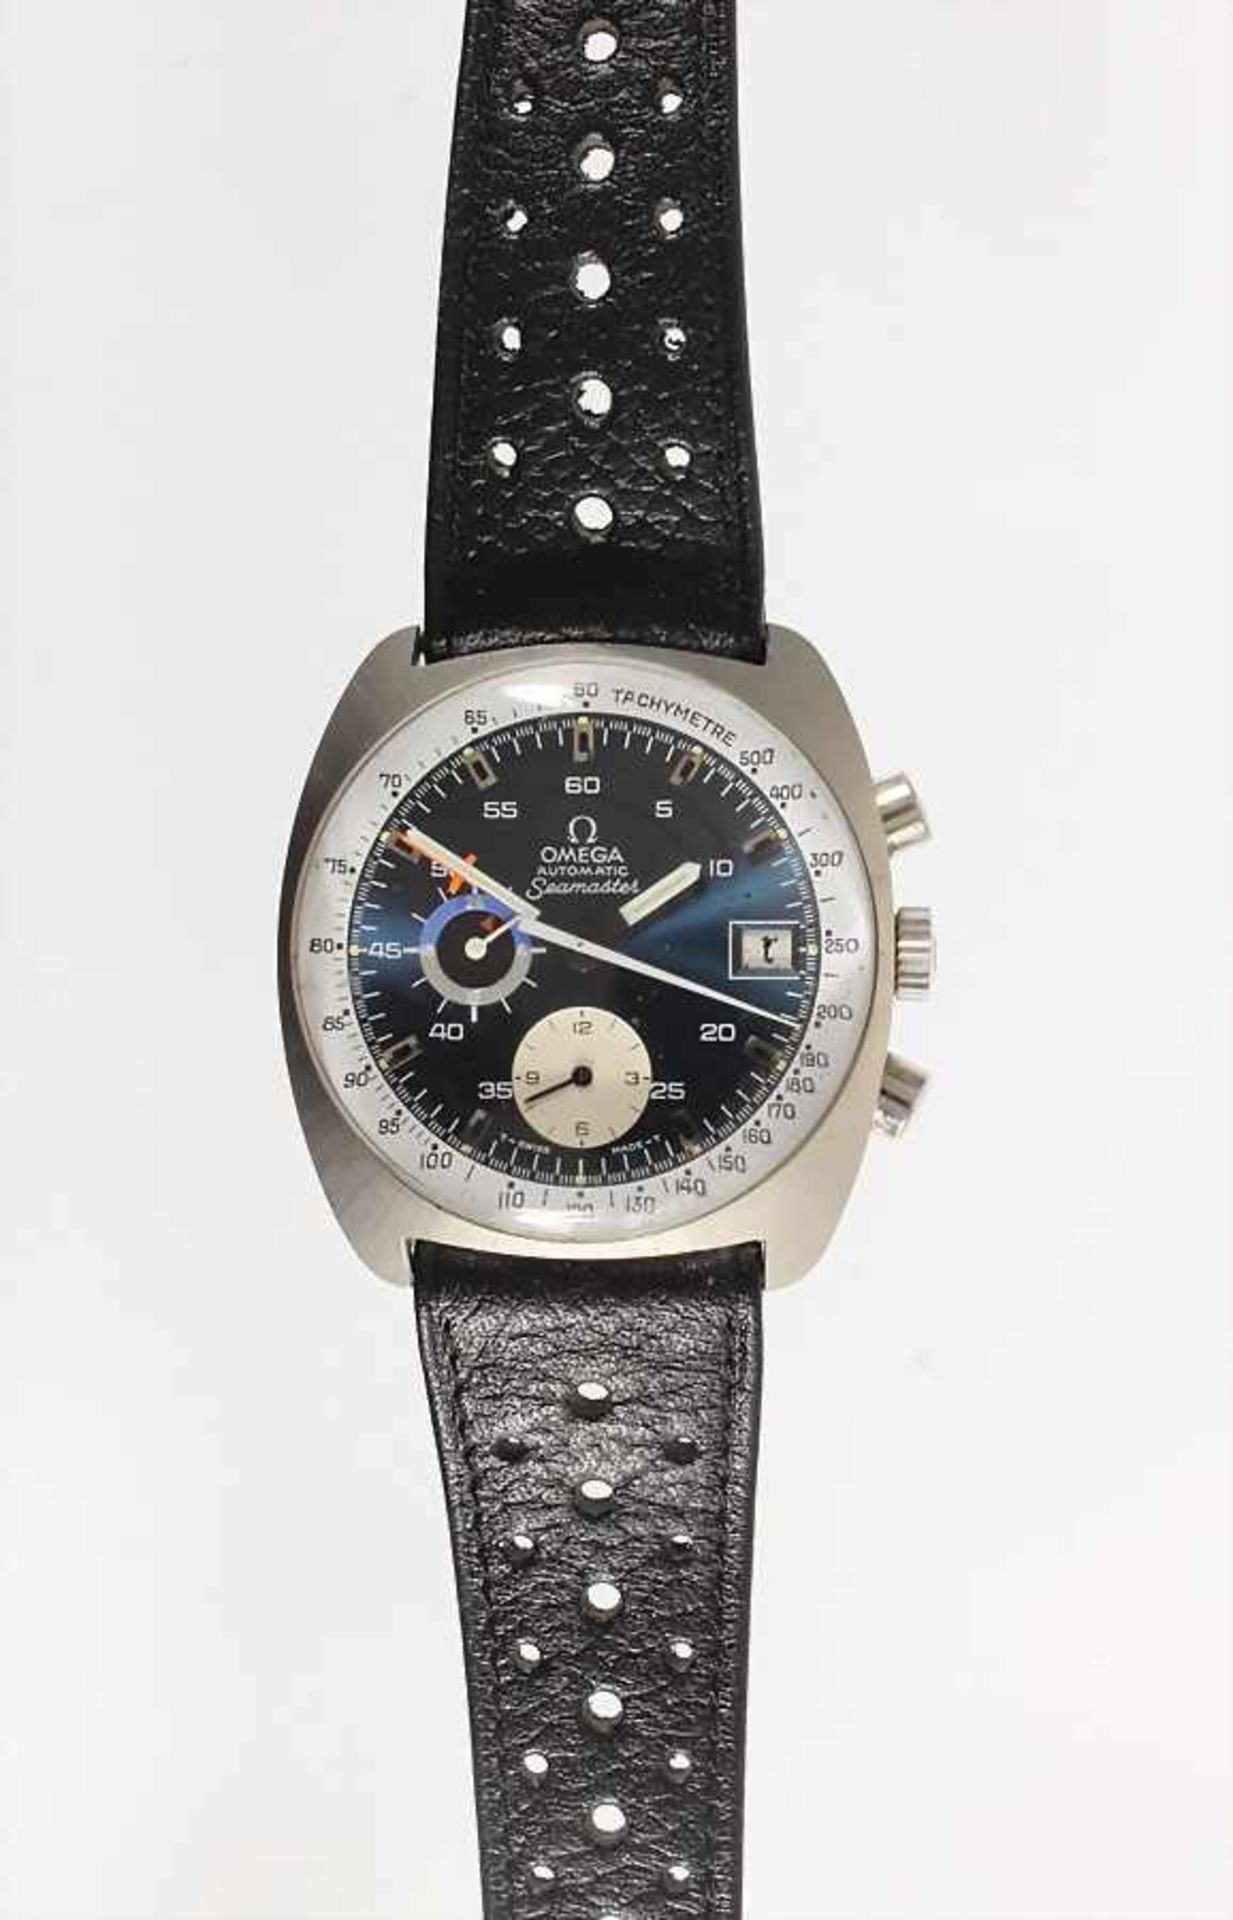 Herren-Armbanduhr "VINTAGE" 1970er Jahre, "OMEGA" Automatik SEAMASTER, Chronograph, Strichindex u.